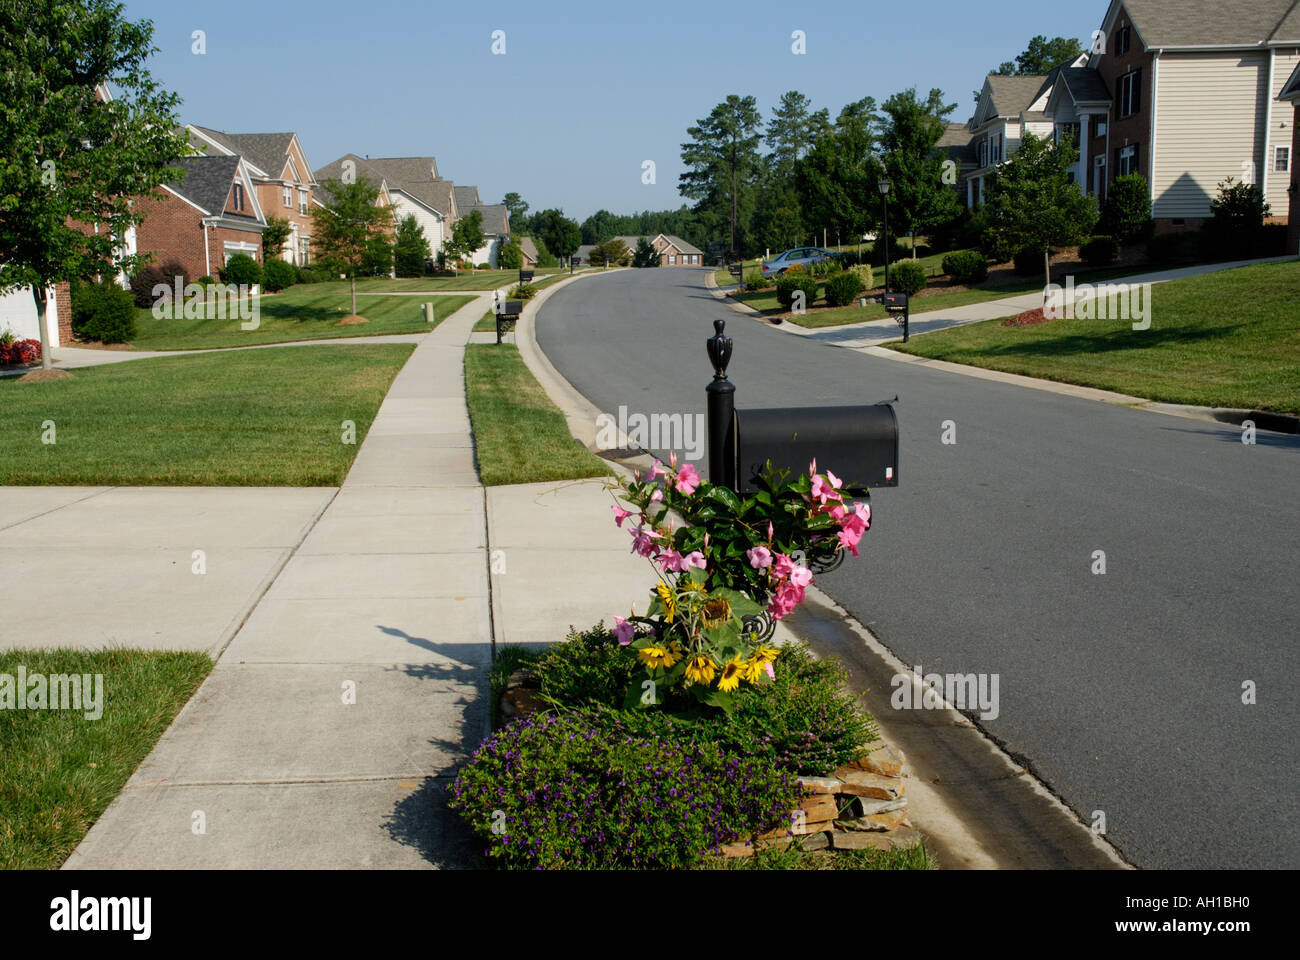 Suburban street neighborhood development with sidewalk, mailbox, flowers Stock Photo